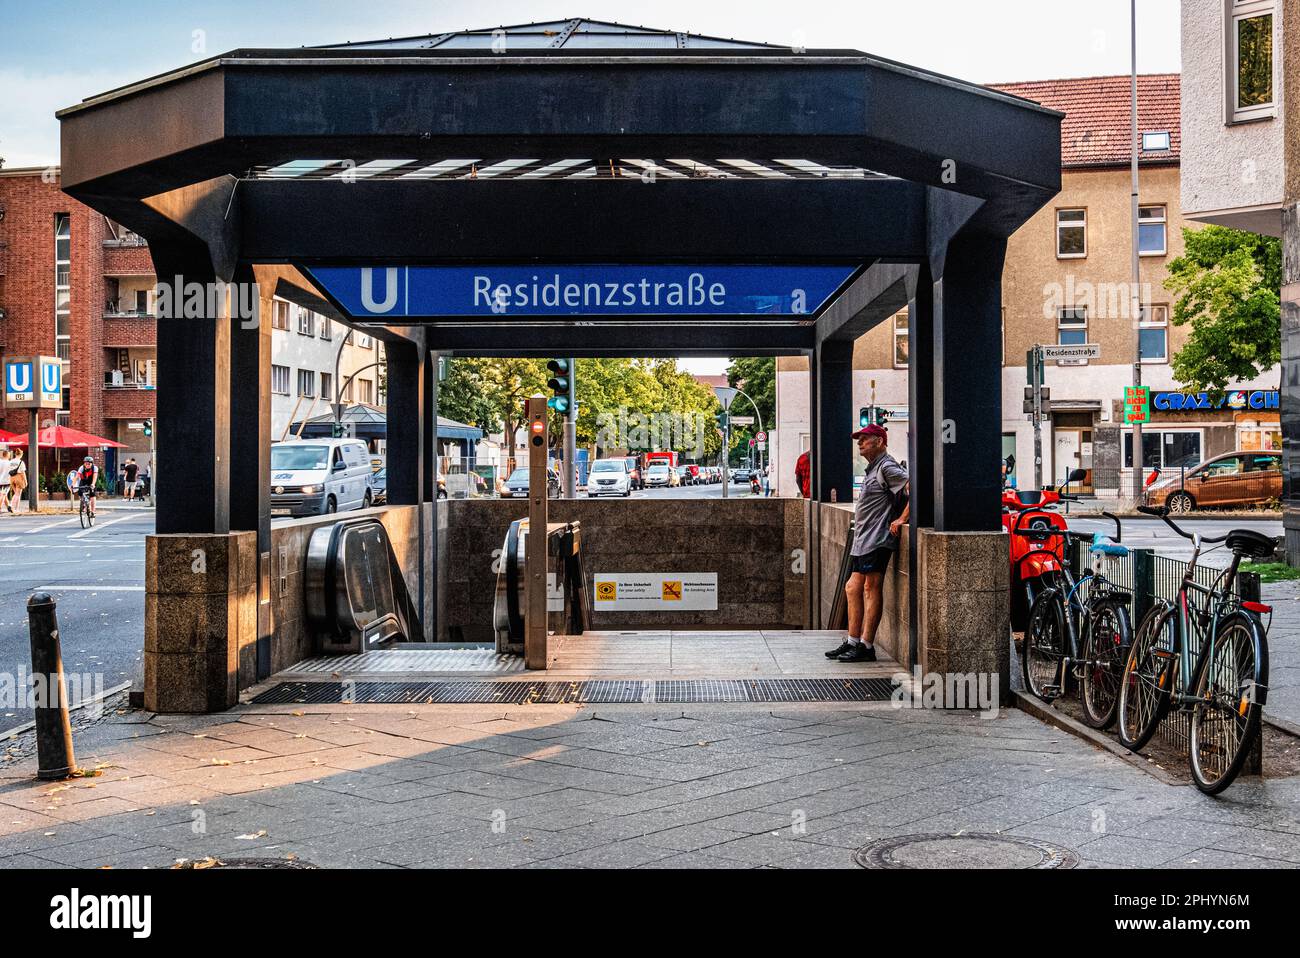 Entrée de la gare de U-Bahn de la Residenzstraße sur la ligne U8. Reinickendorf,Berlin,Allemagne Banque D'Images